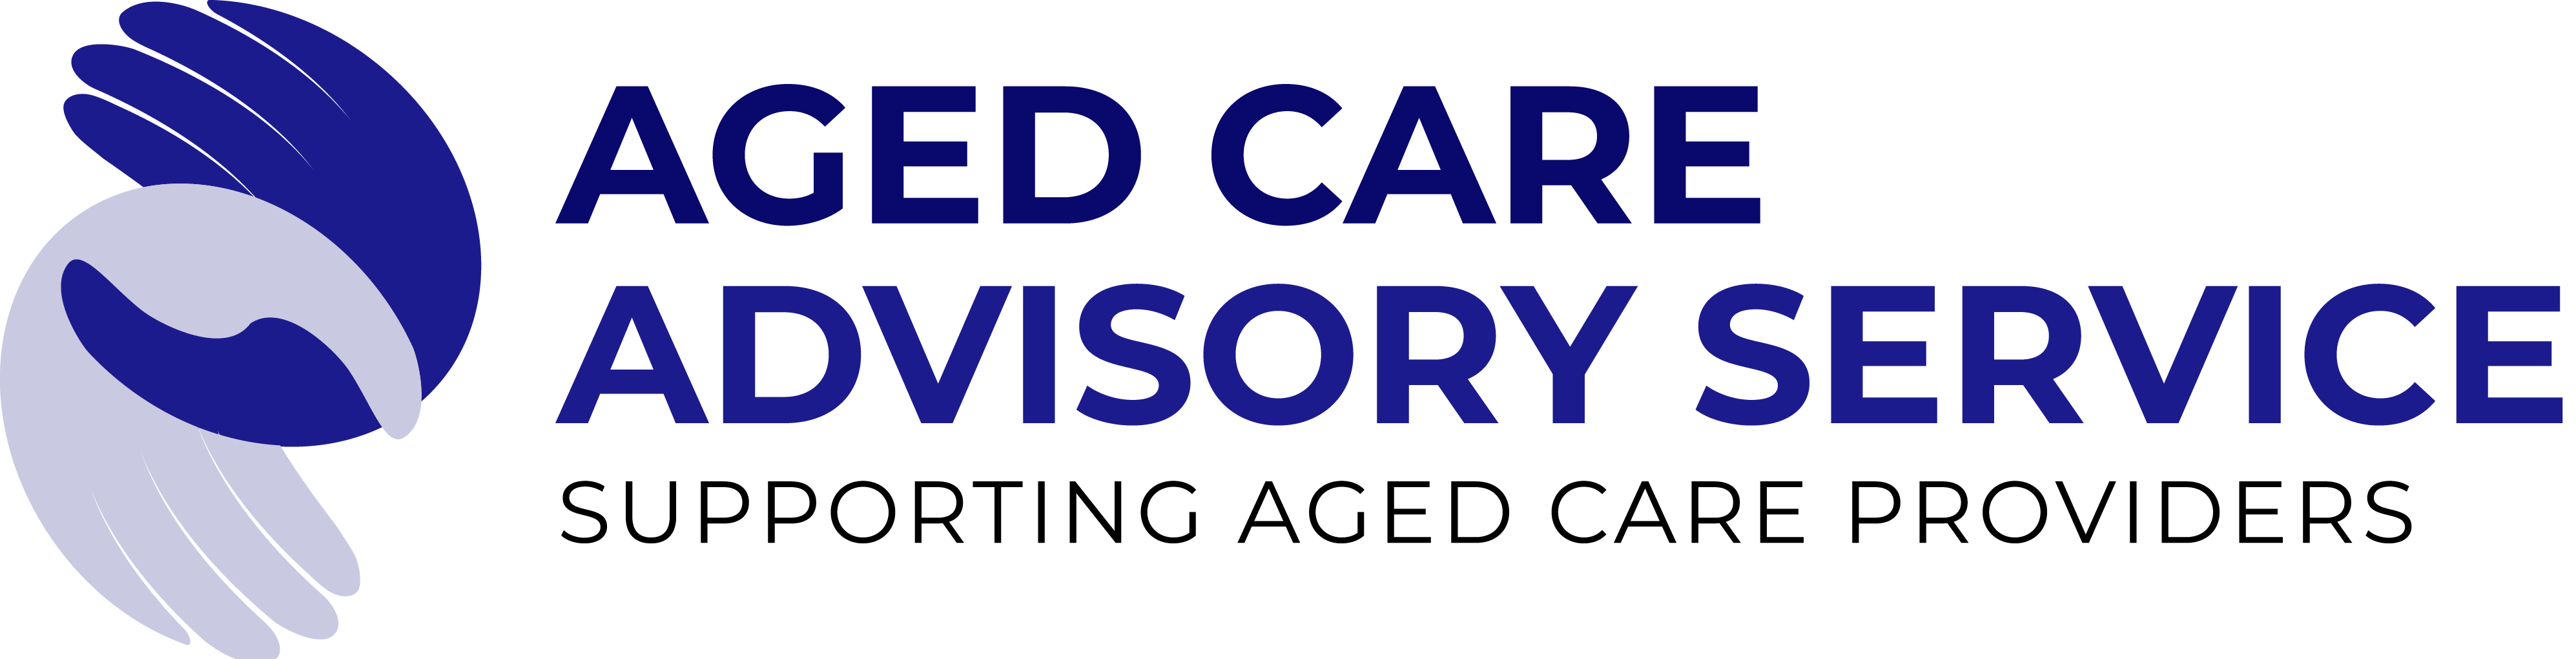 Aged Care Advisory Service